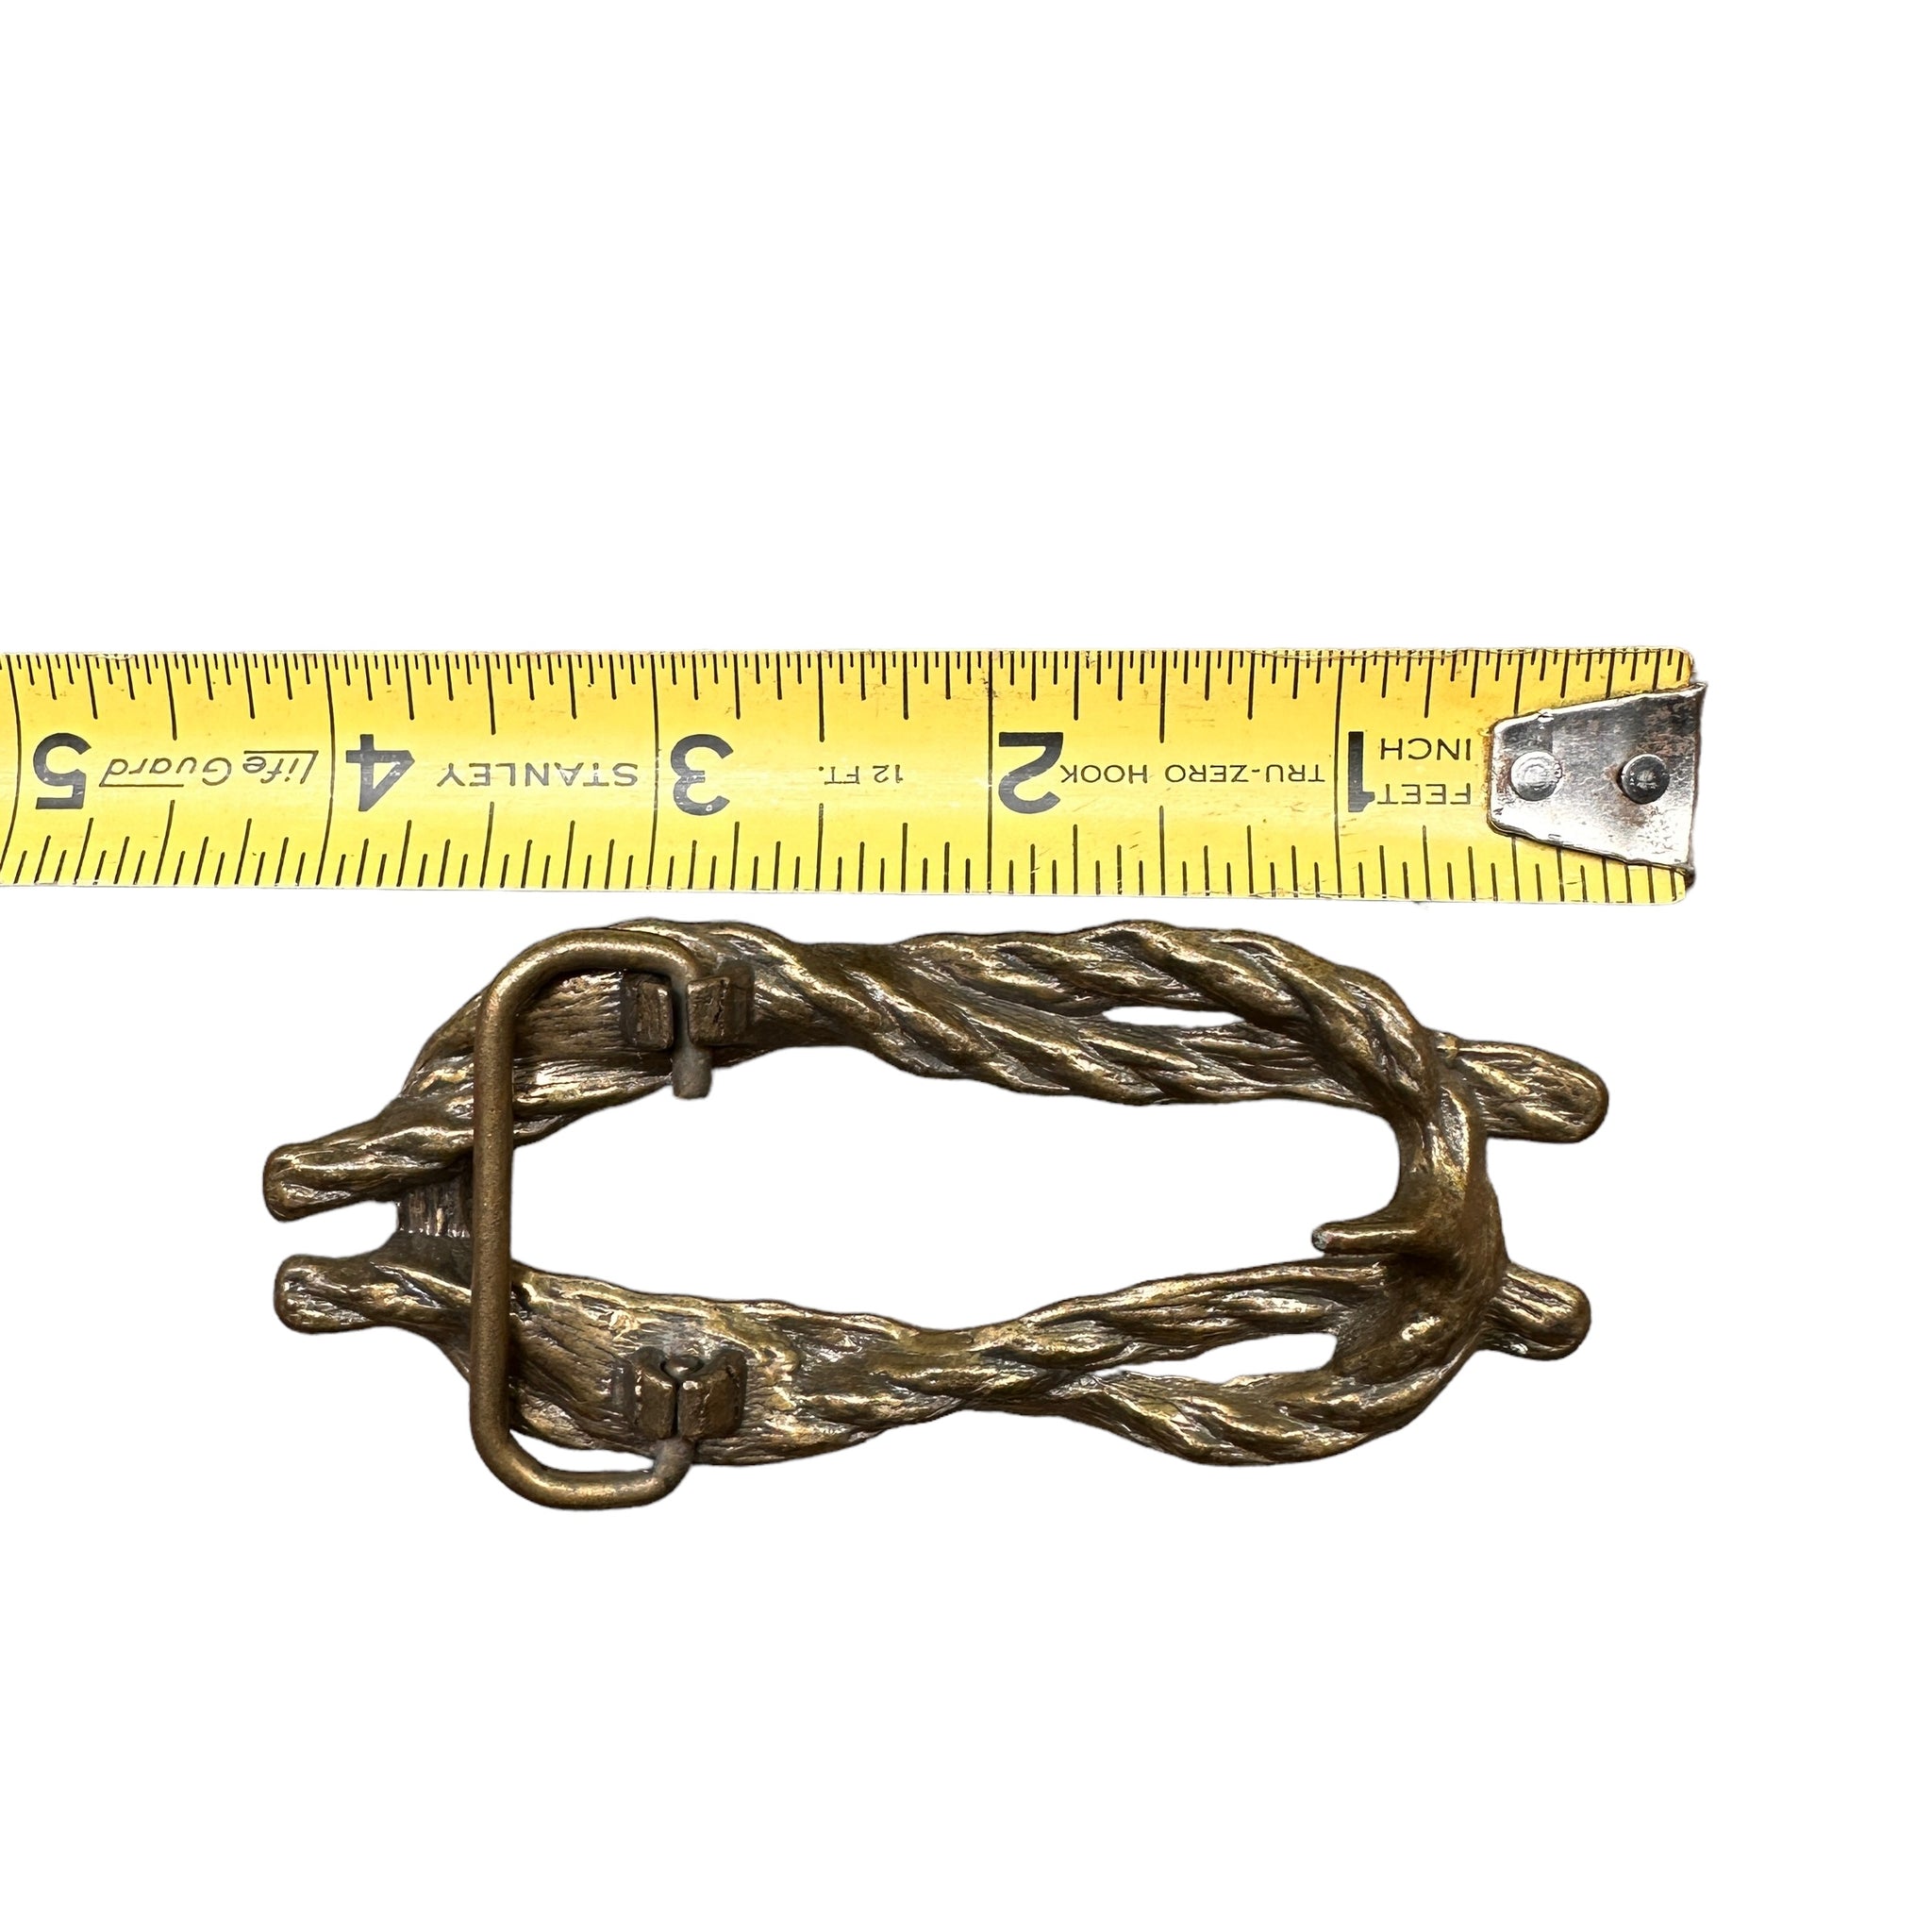 Brass square knot belt buckle